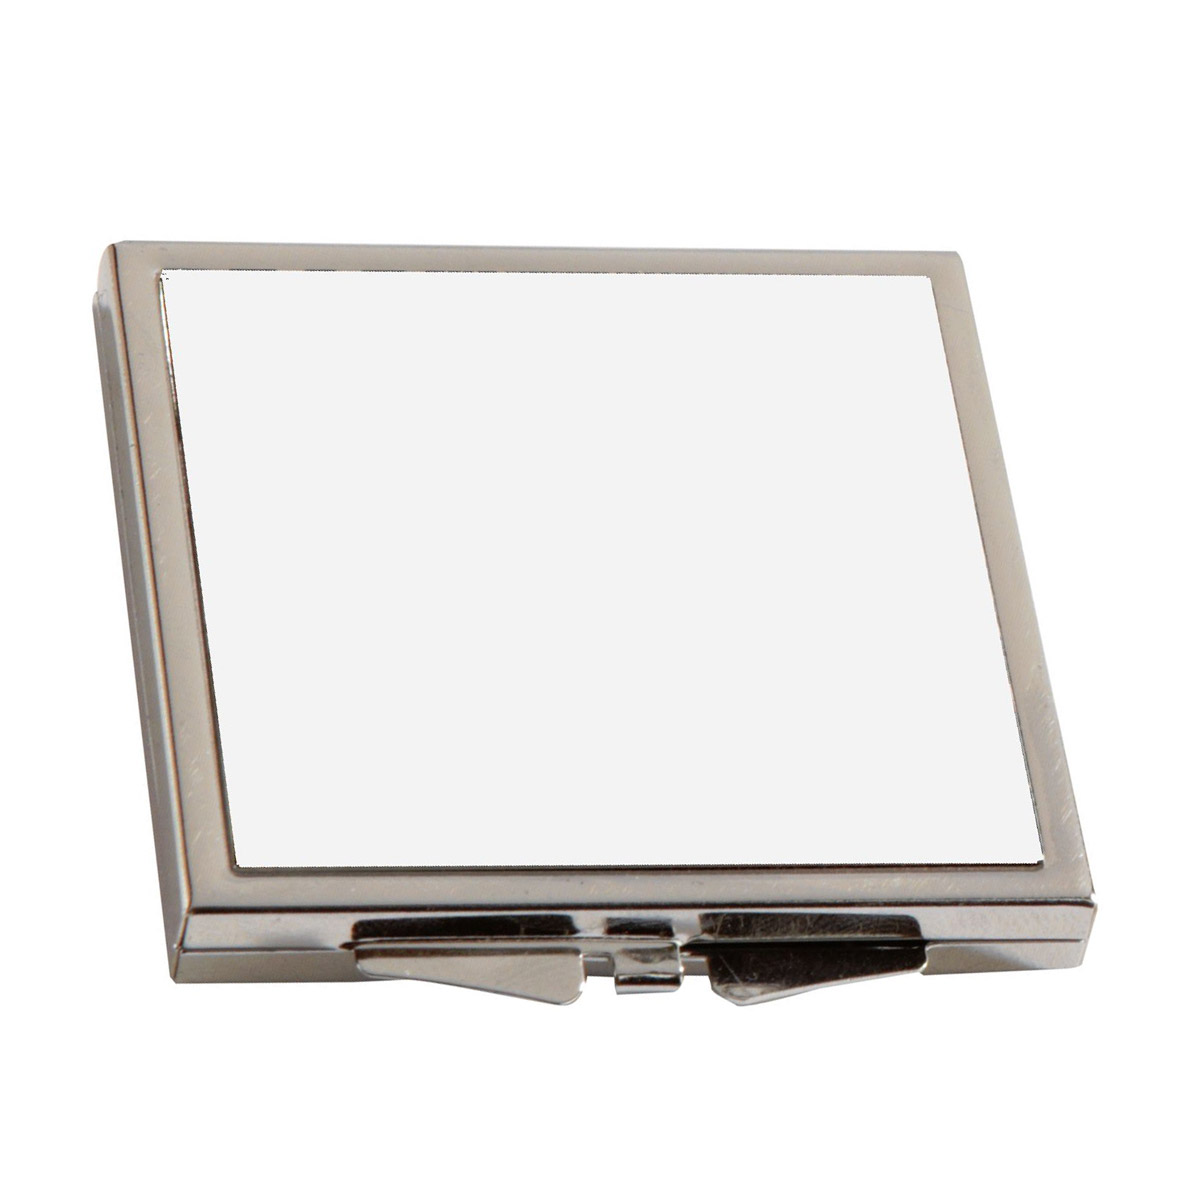 Silver Square Metal Compact Mirror